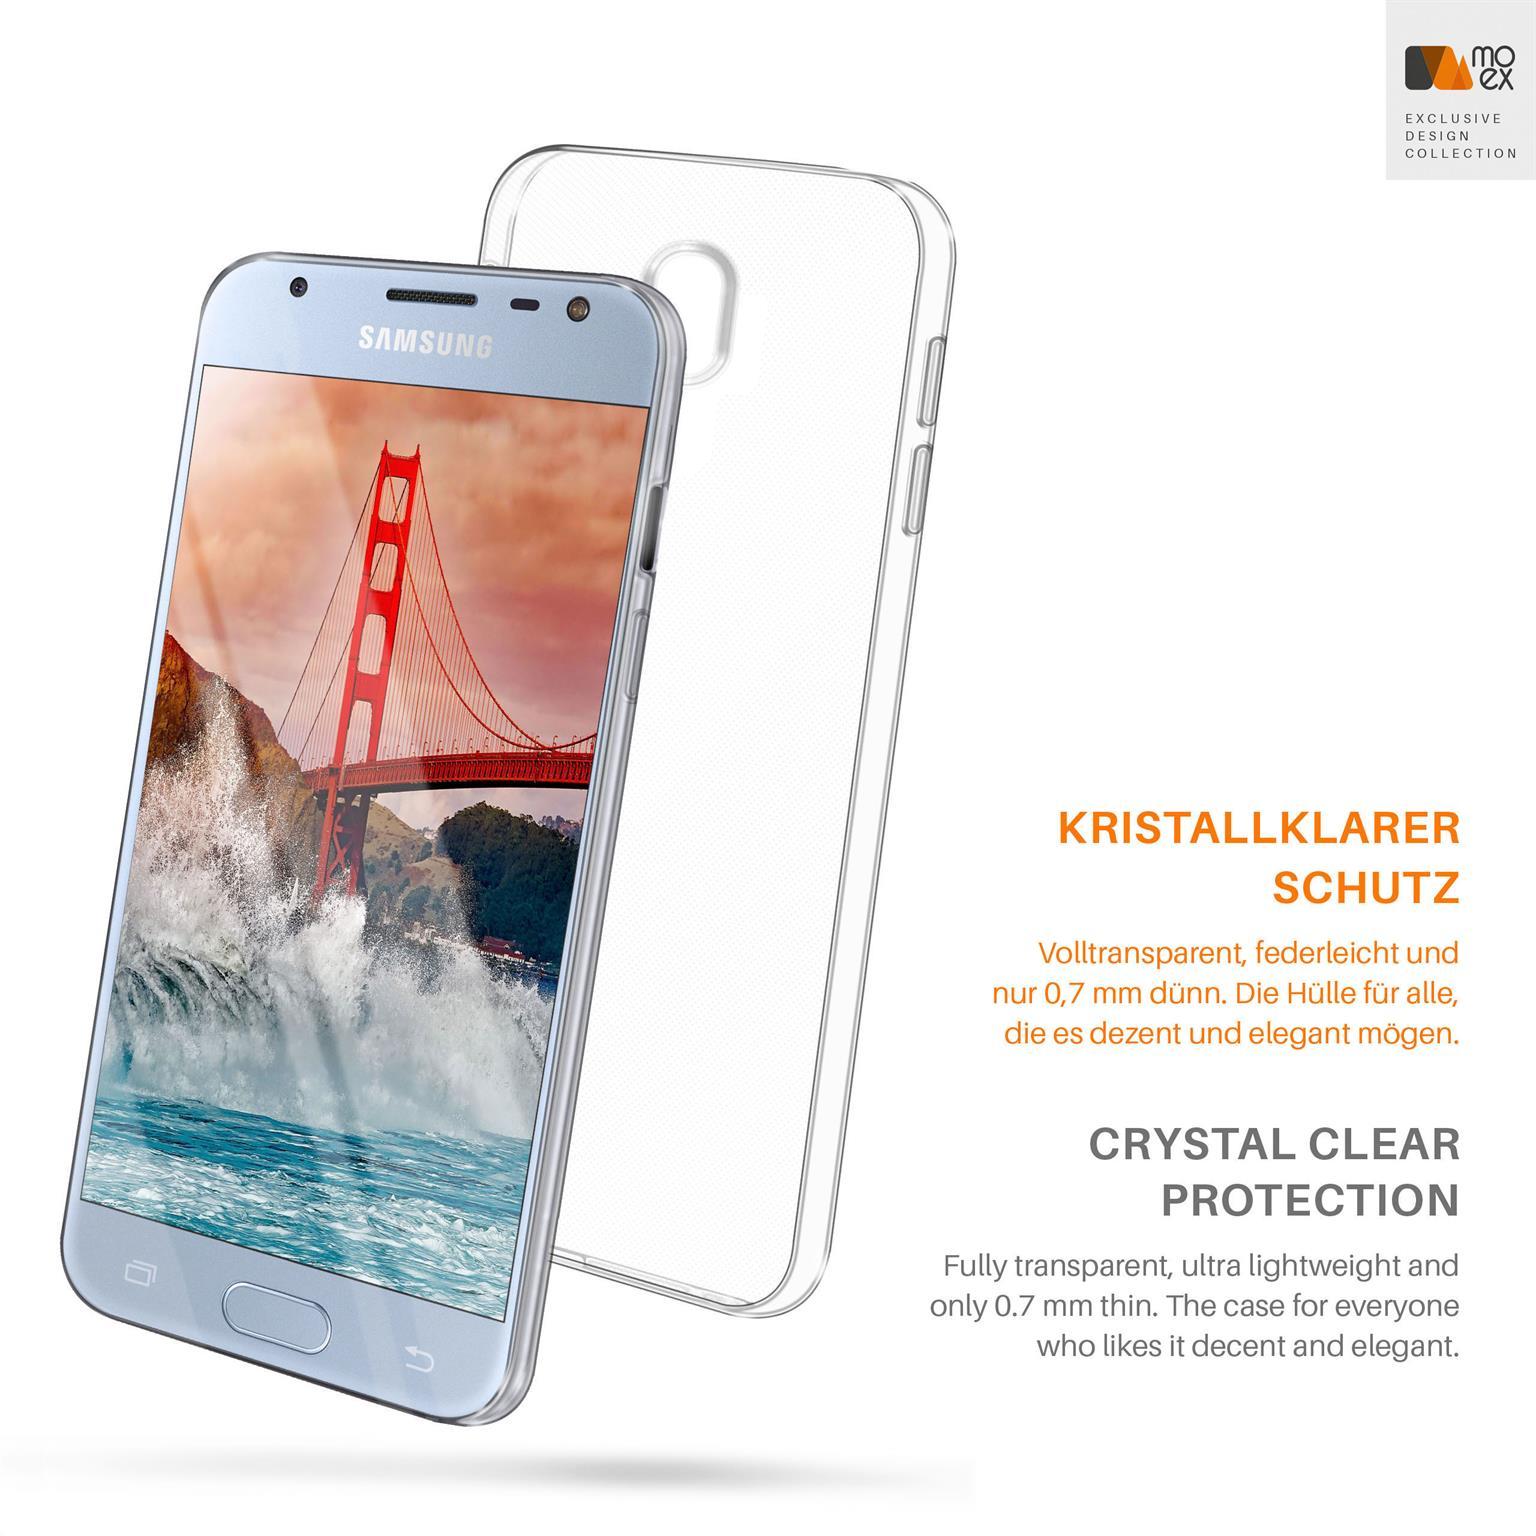 Samsung, Backcover, Aero MOEX Crystal-Clear Case, (2017), J3 Galaxy